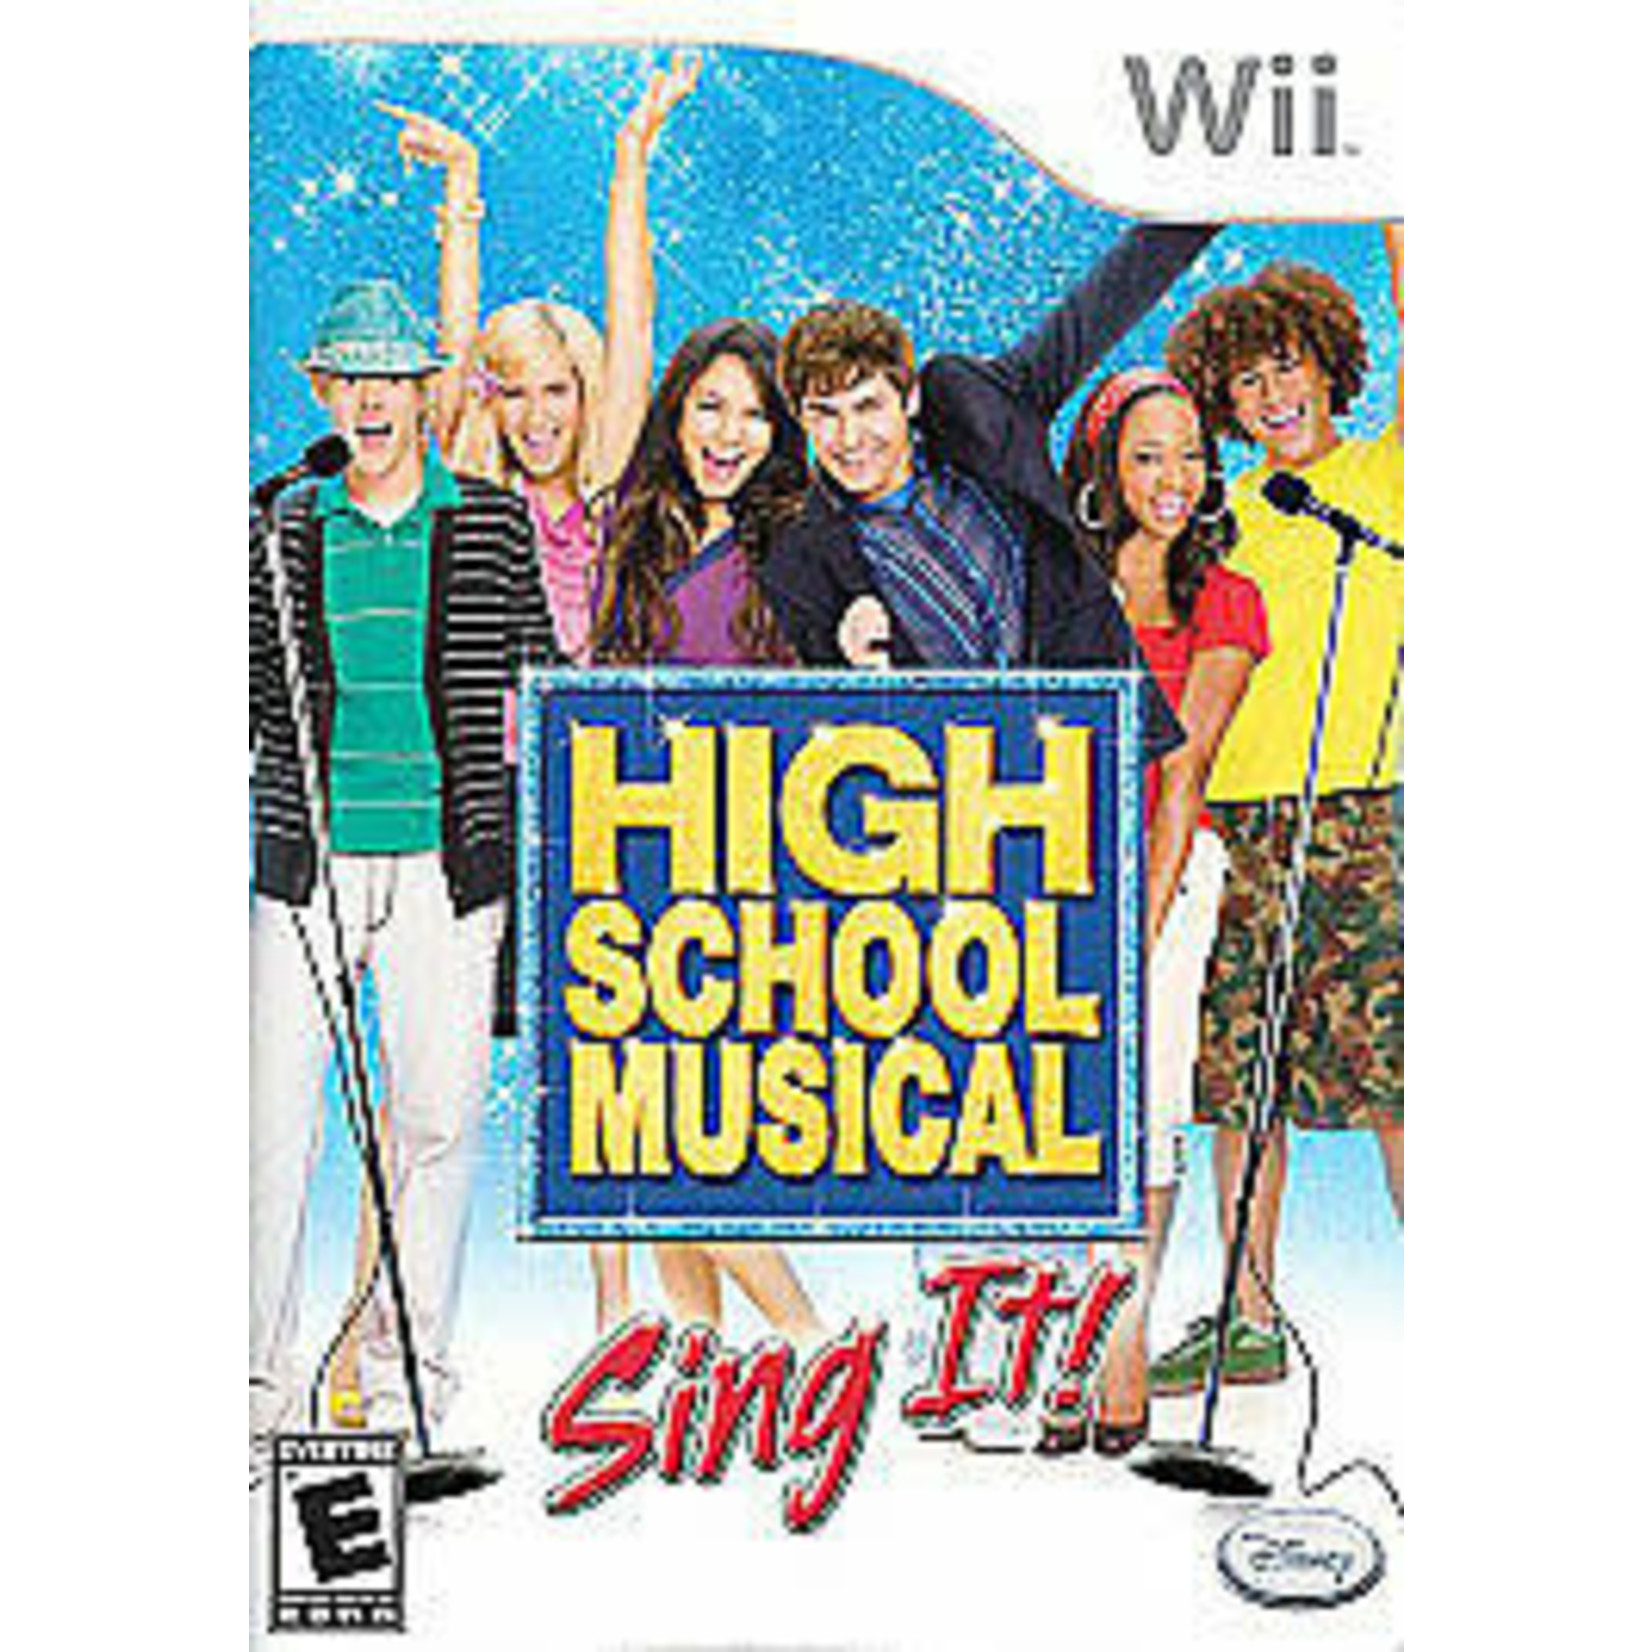 WIIUSD-High School Musical Sing It